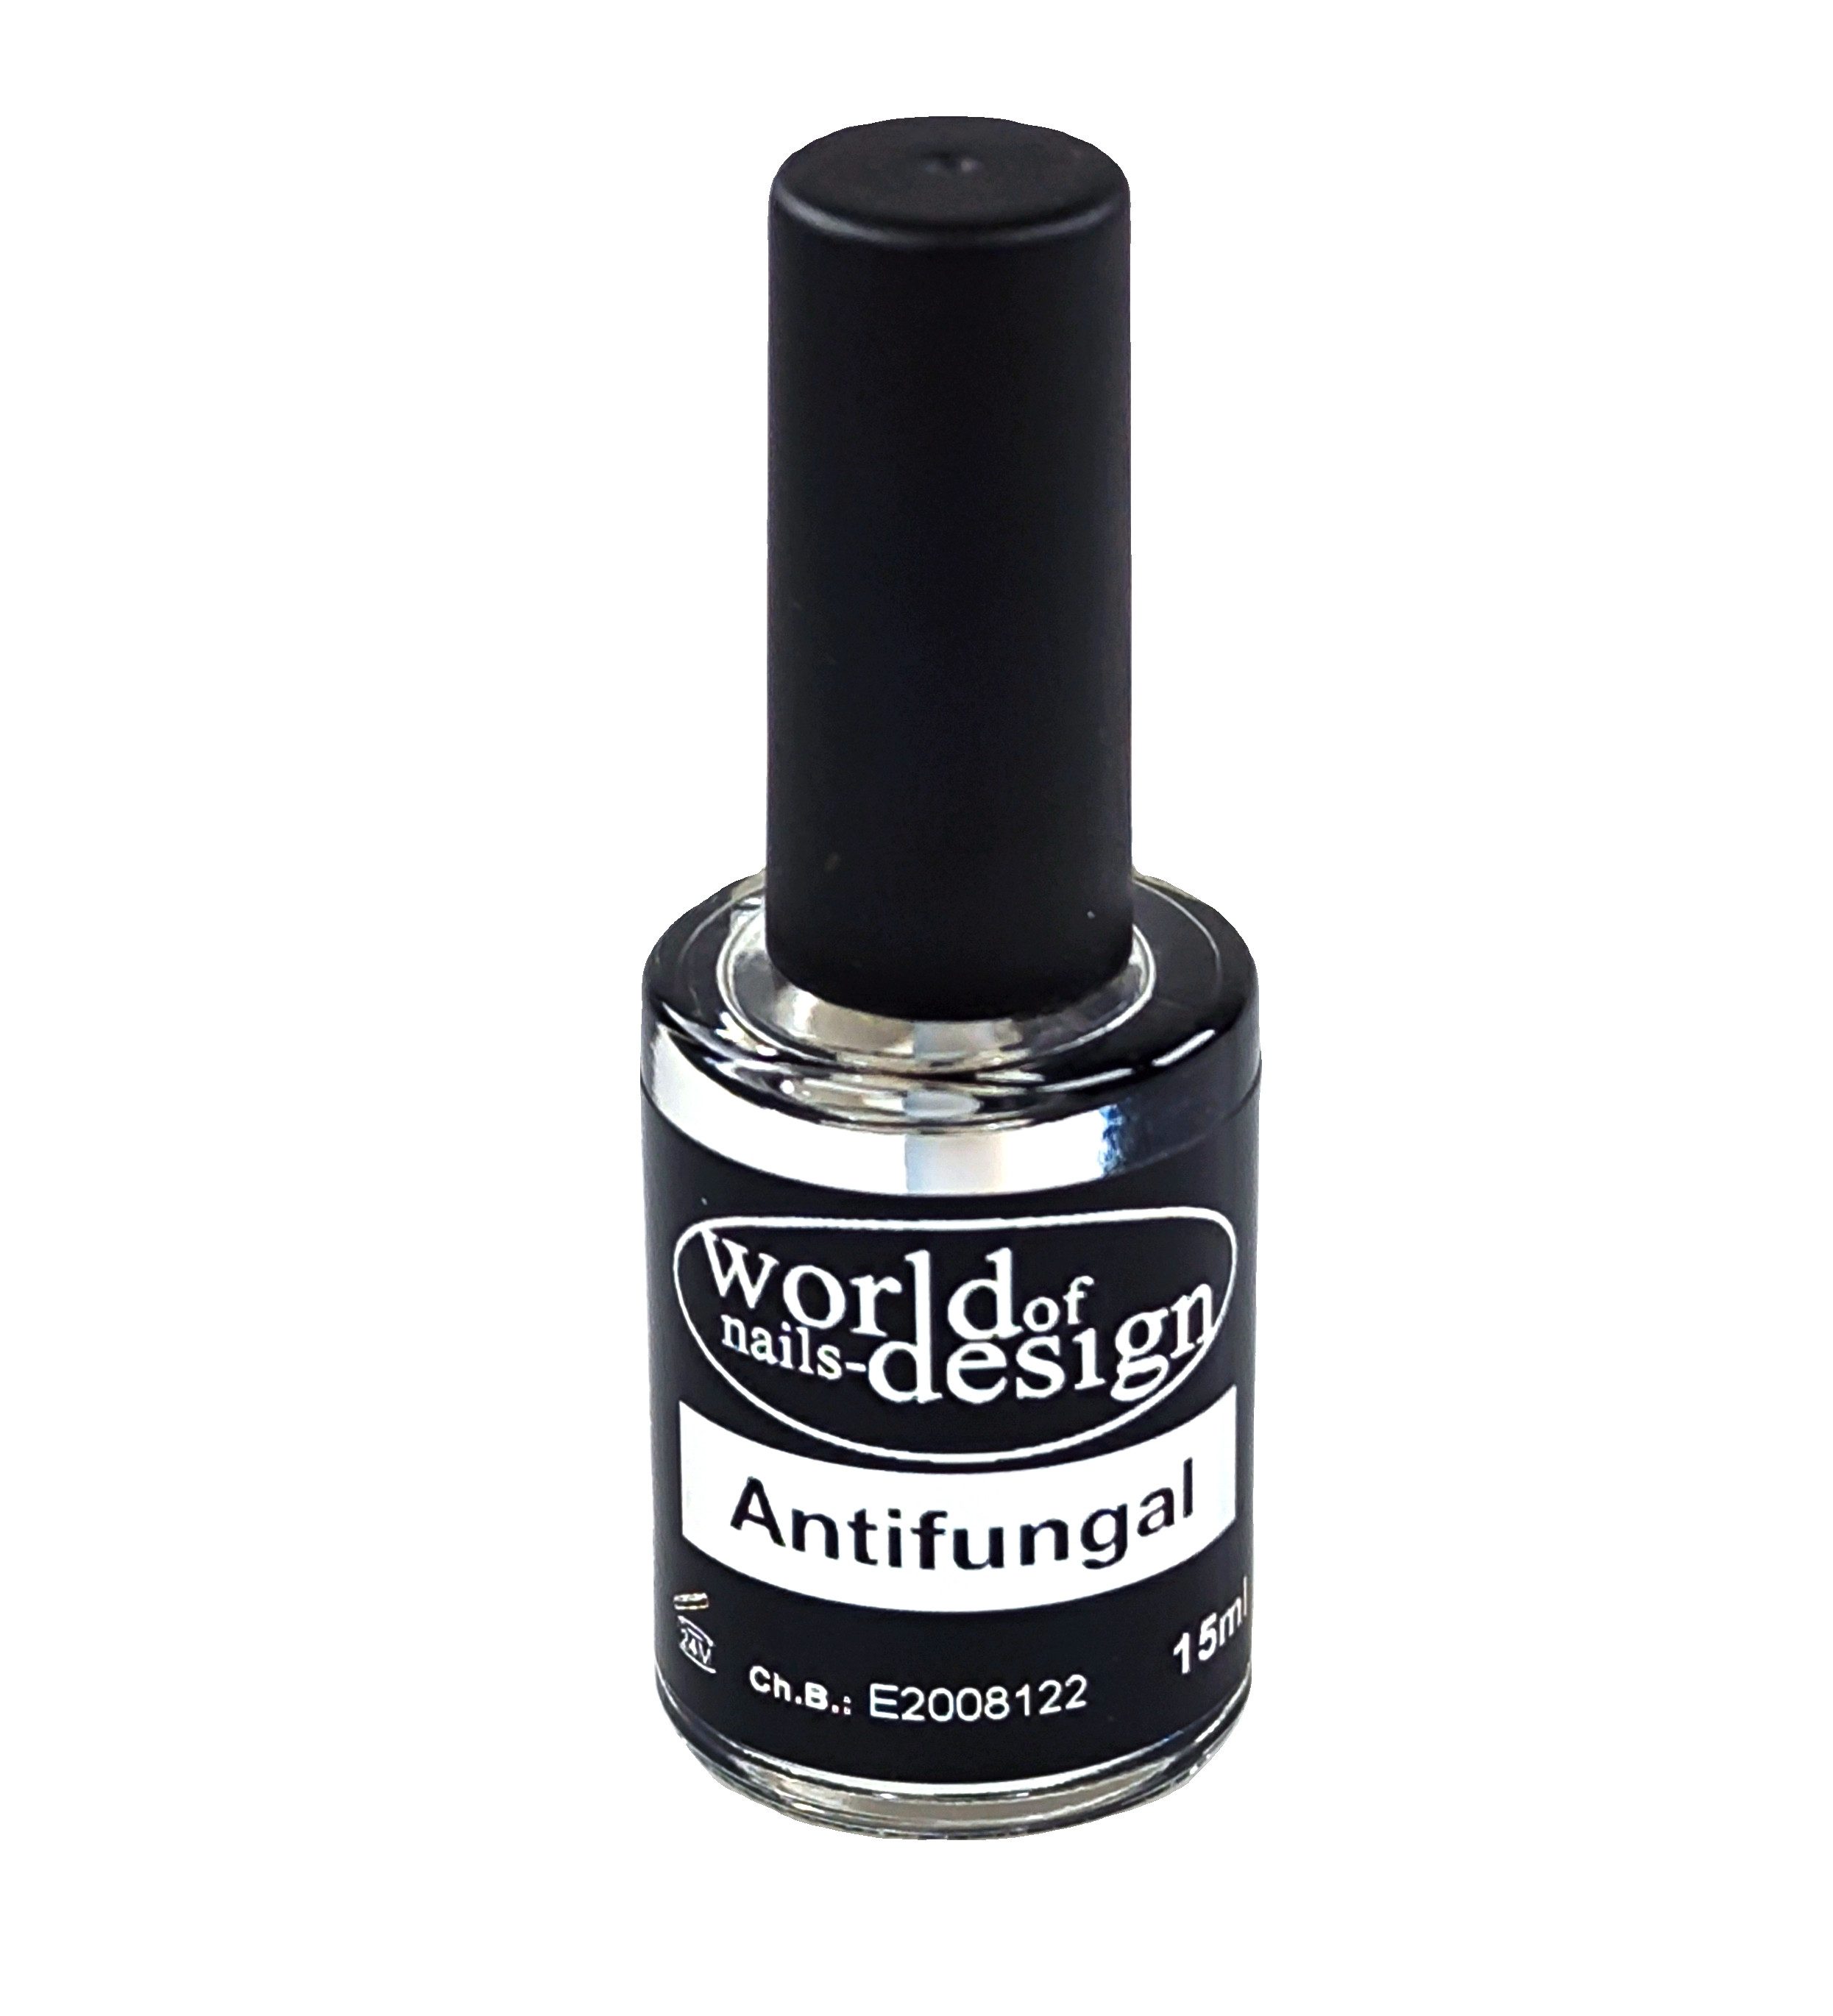 World of Nails-Design Nageldesign Zubehör Antifugal / Antiseptikum 15 ml, antifugal